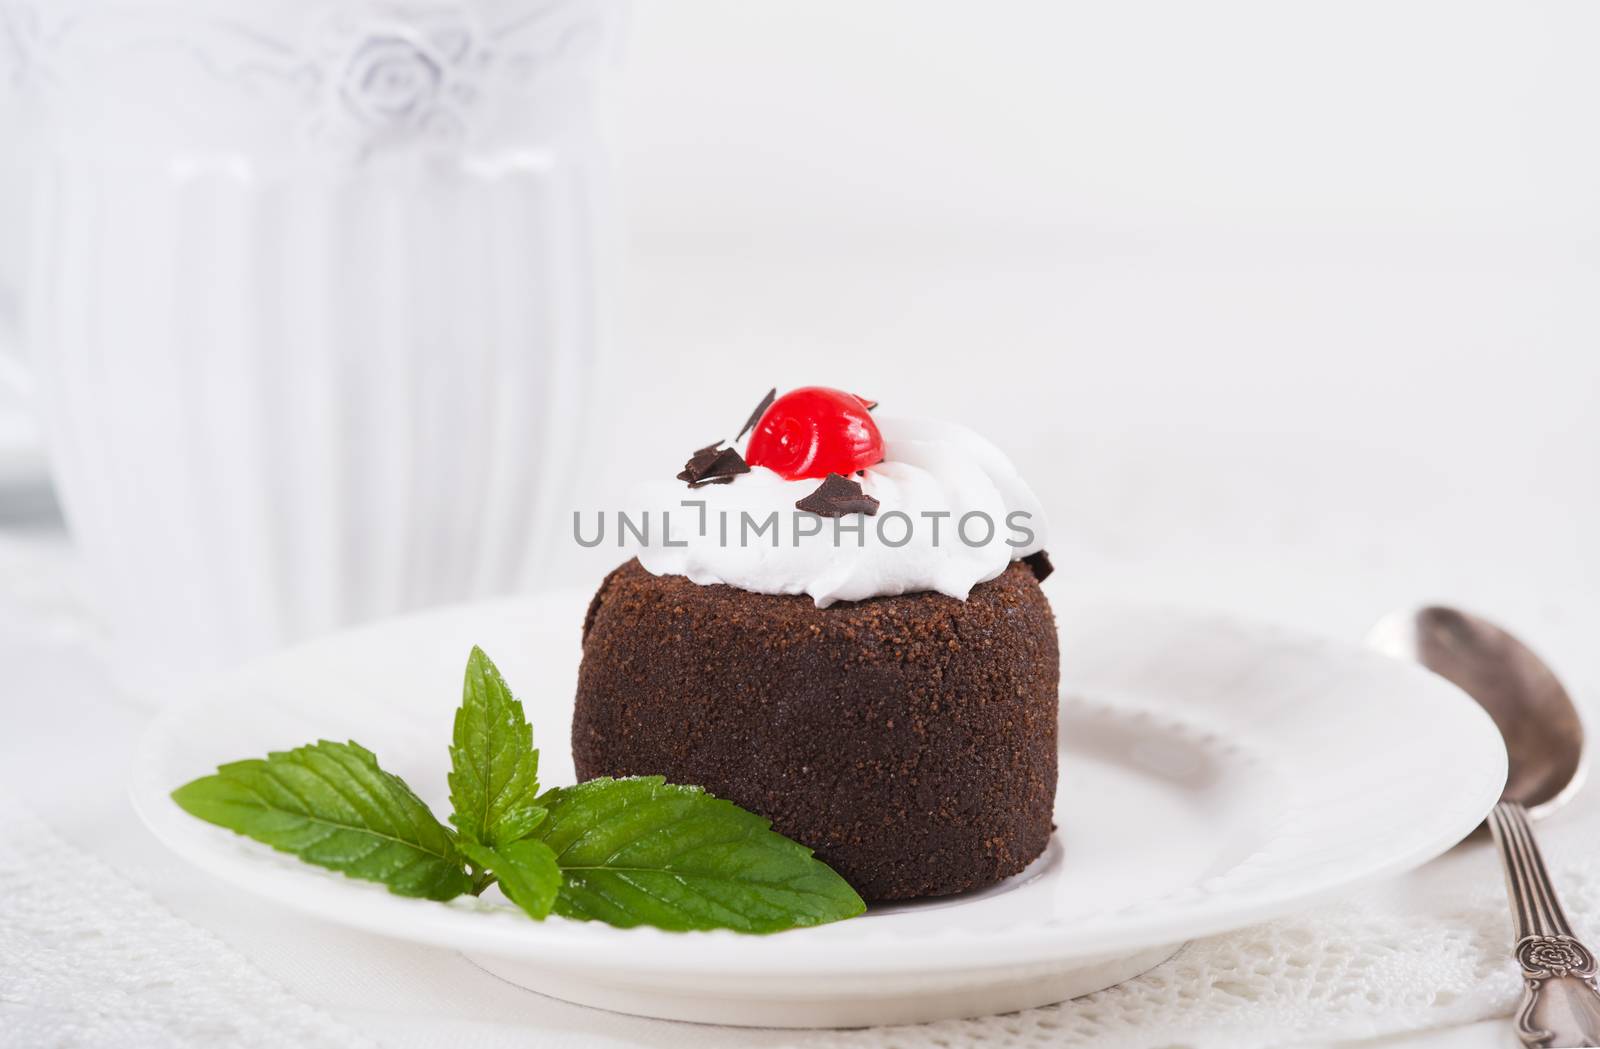 Chocolate sweet cake "Potato" on a plate on table, selective focus